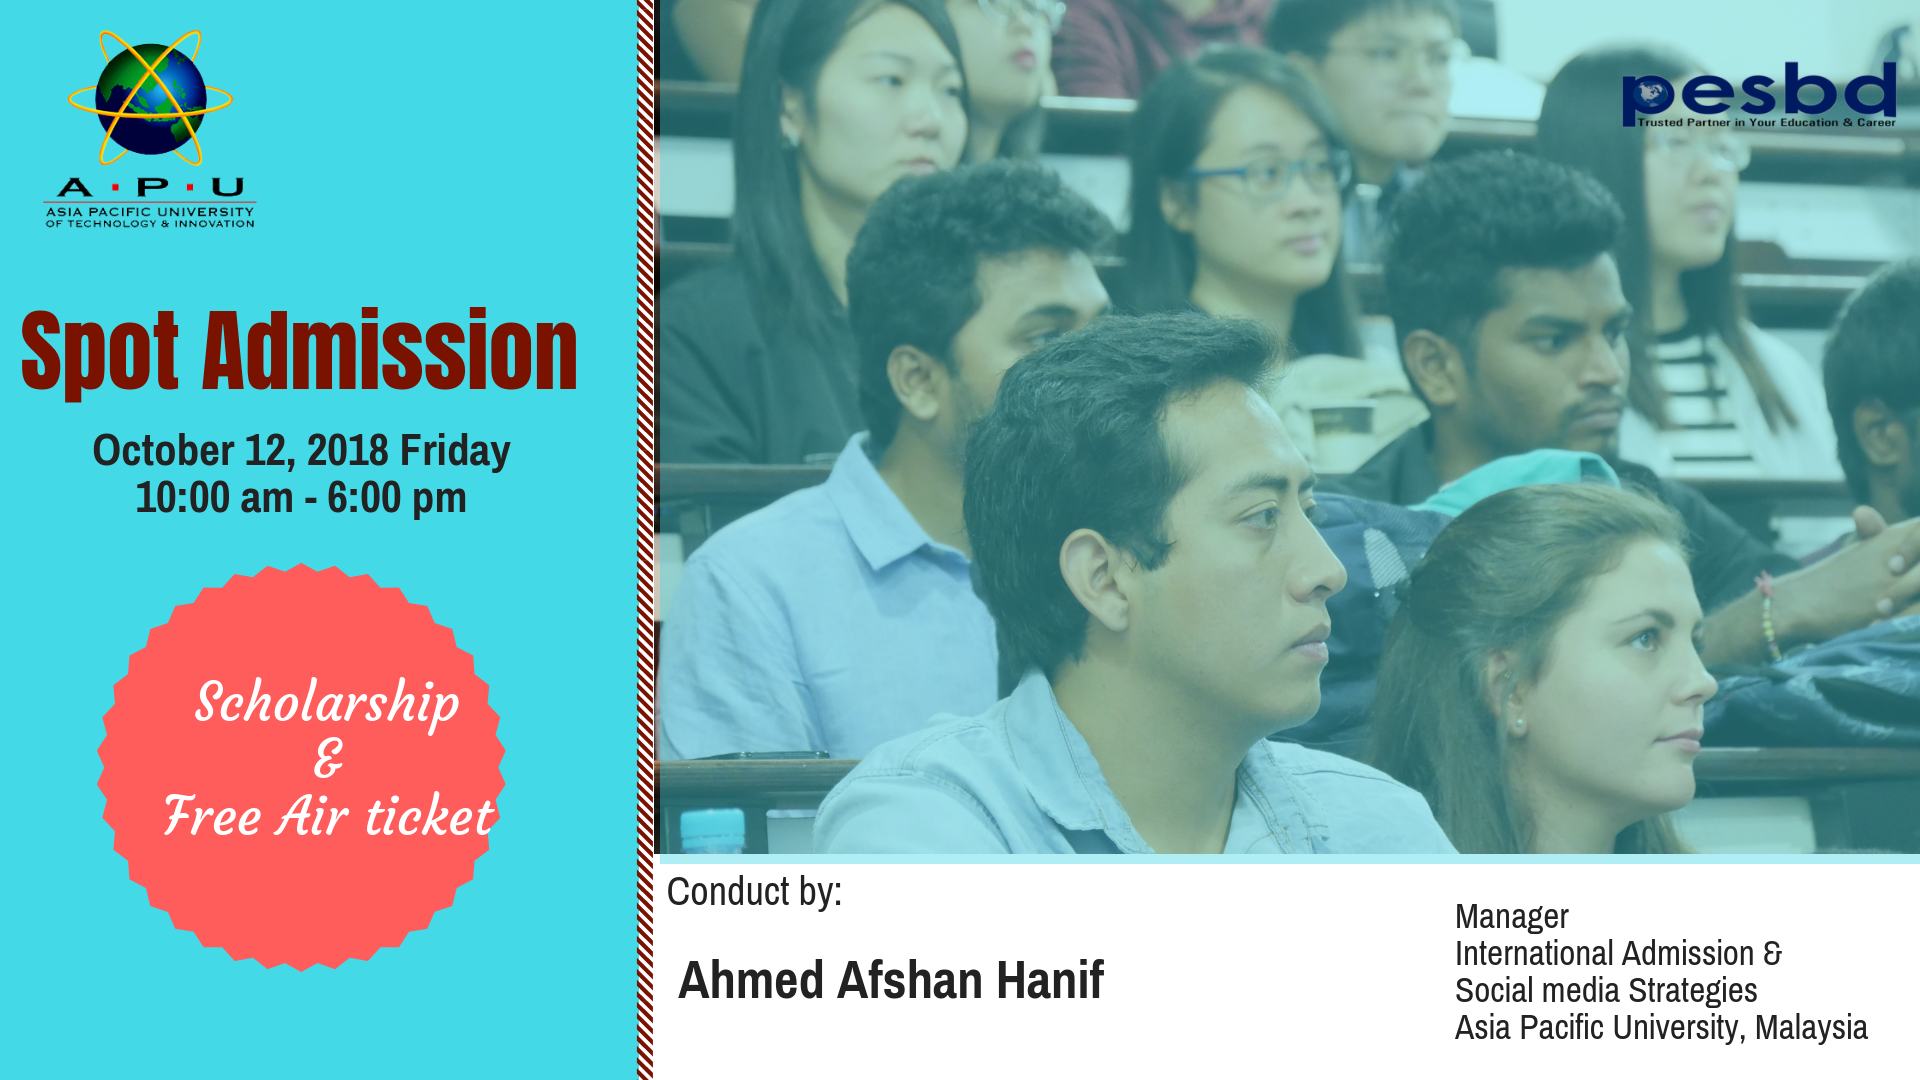 Spot Admission: Asia Pacific University, Malaysia